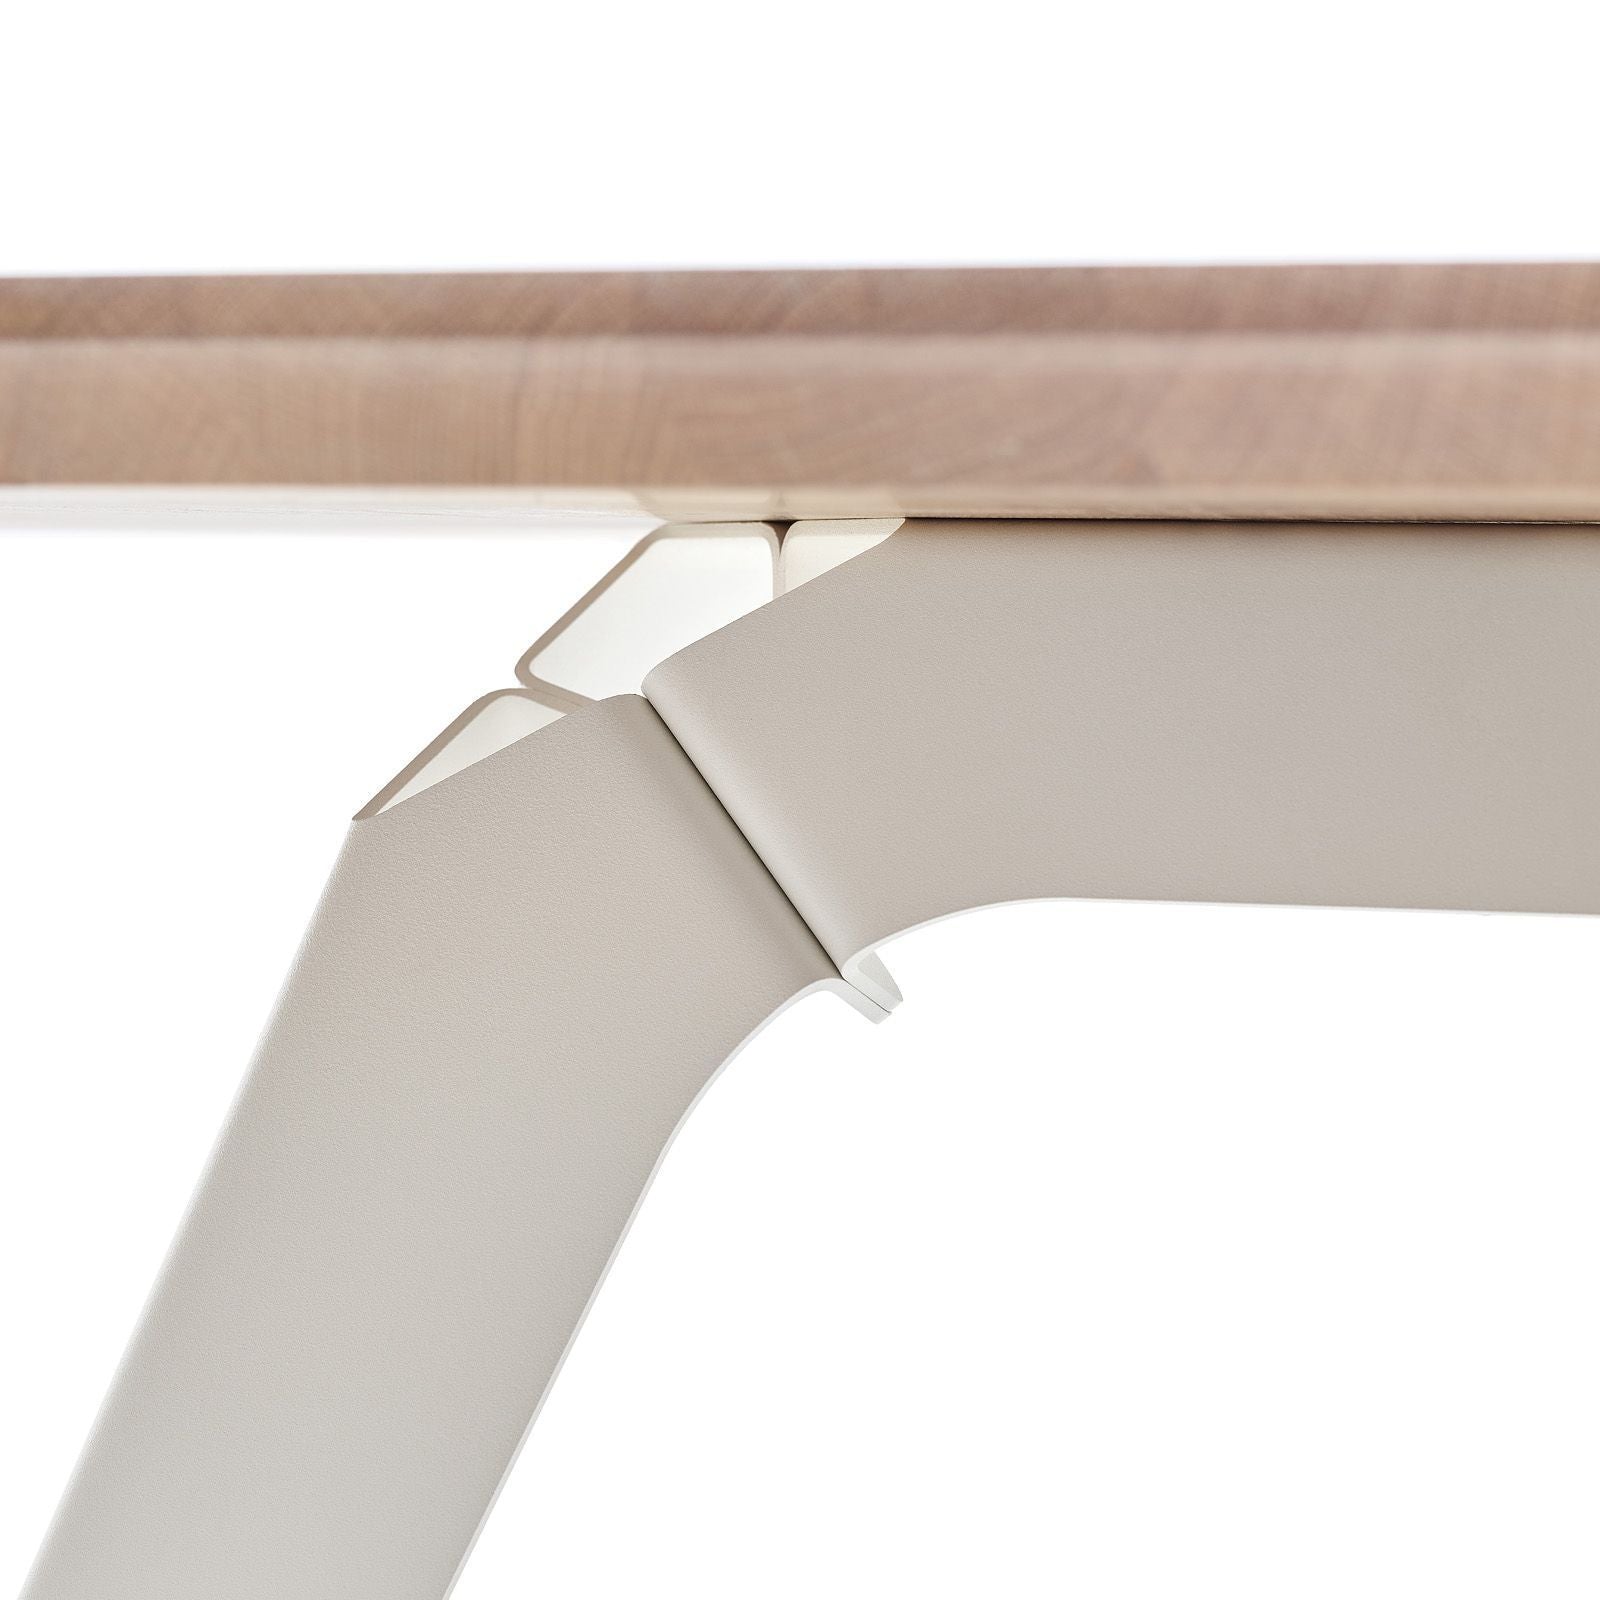 puik褶皱餐桌200x95cm，白色 /自然